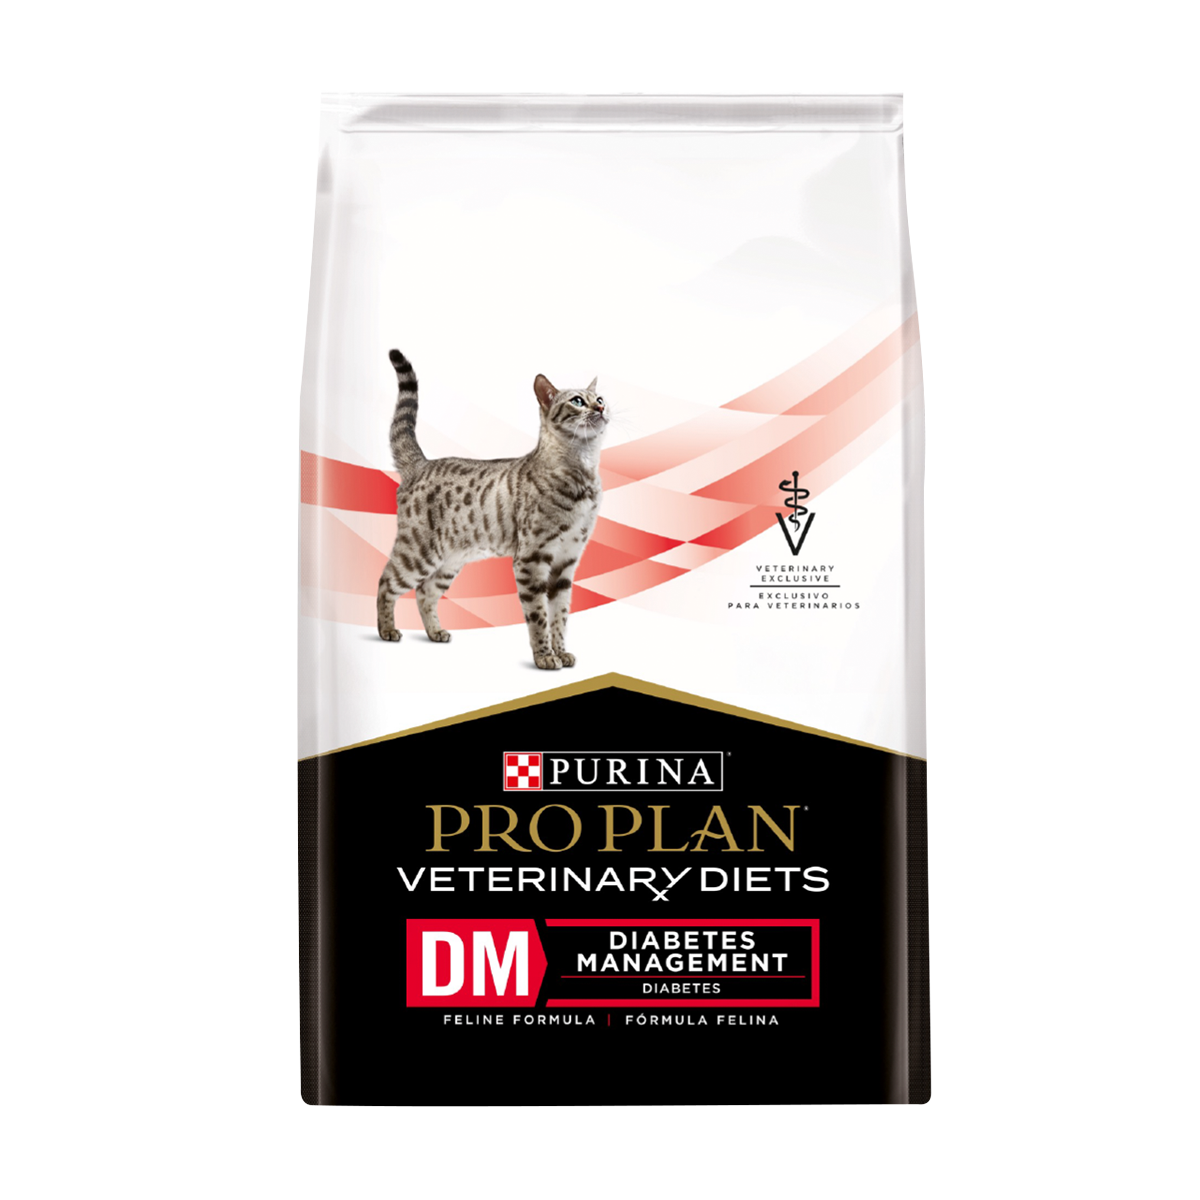 purina-pro-plan-veterinay-diets-cat-dm-diabets-managment.png